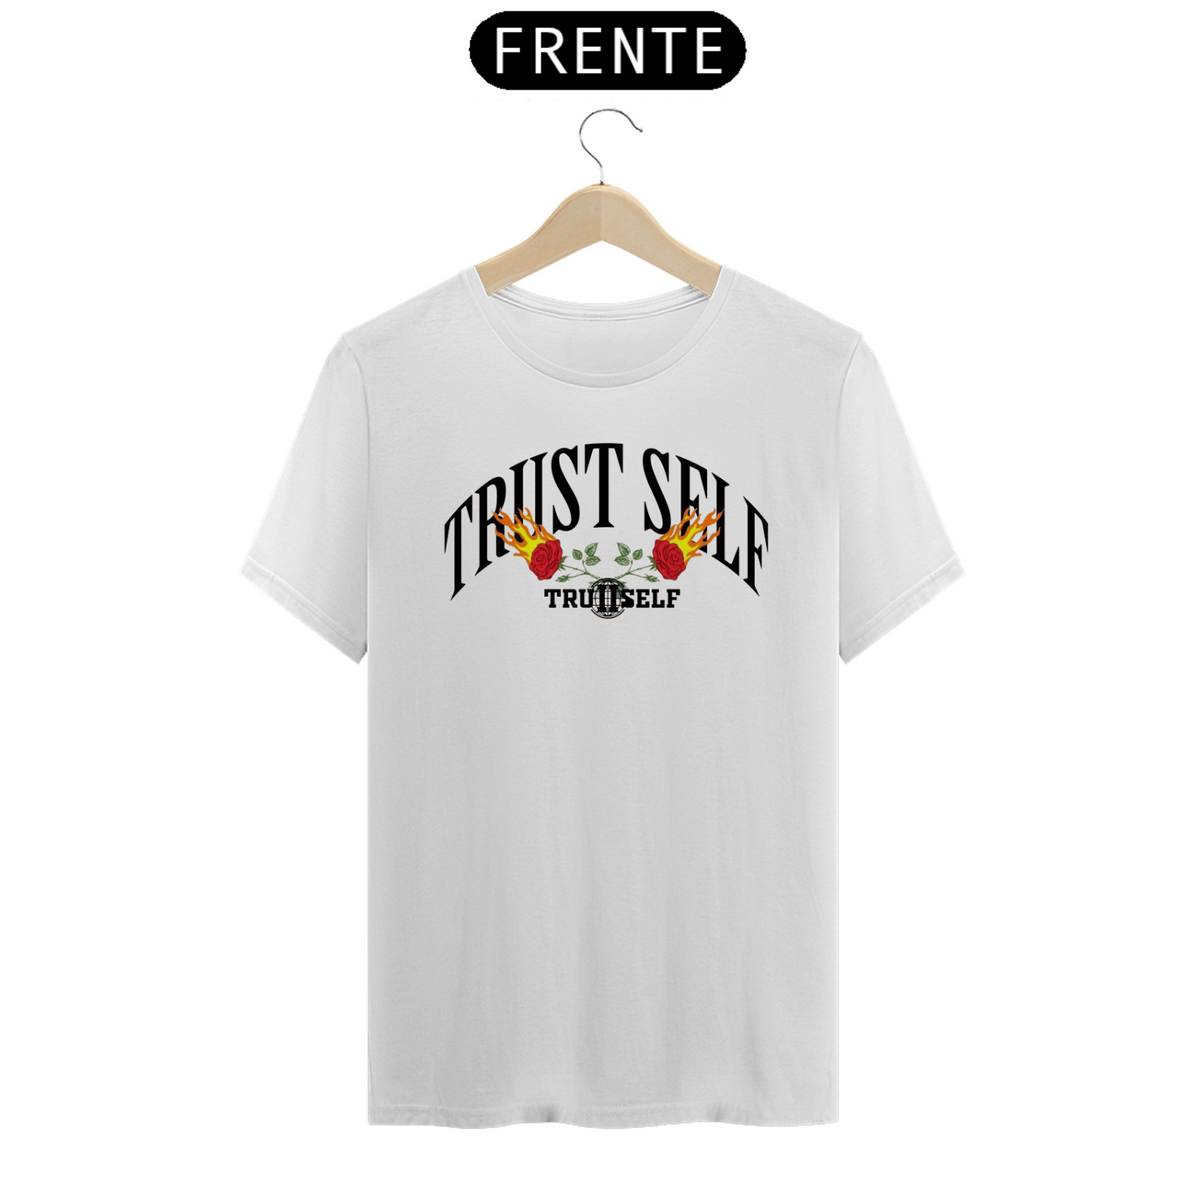 Nome do produto: T-Shirt Trust Self